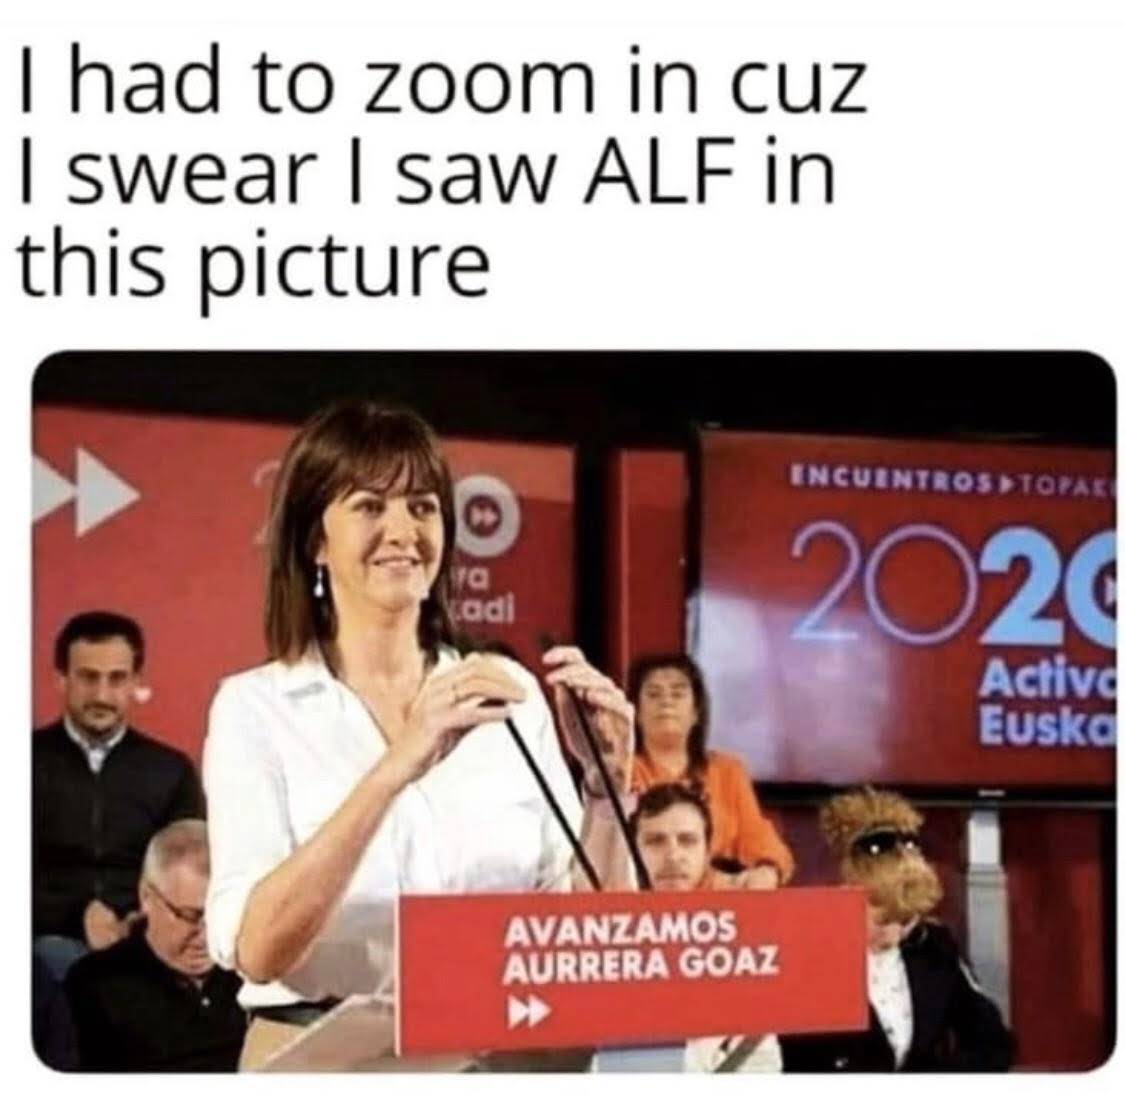 dank - memes -  had to zoom in alf - I had to zoom in cuz I swear I saw Alf in this picture Encuentros Totas 2020 kadi Activa Euska Avanzamos Aurrera Goaz